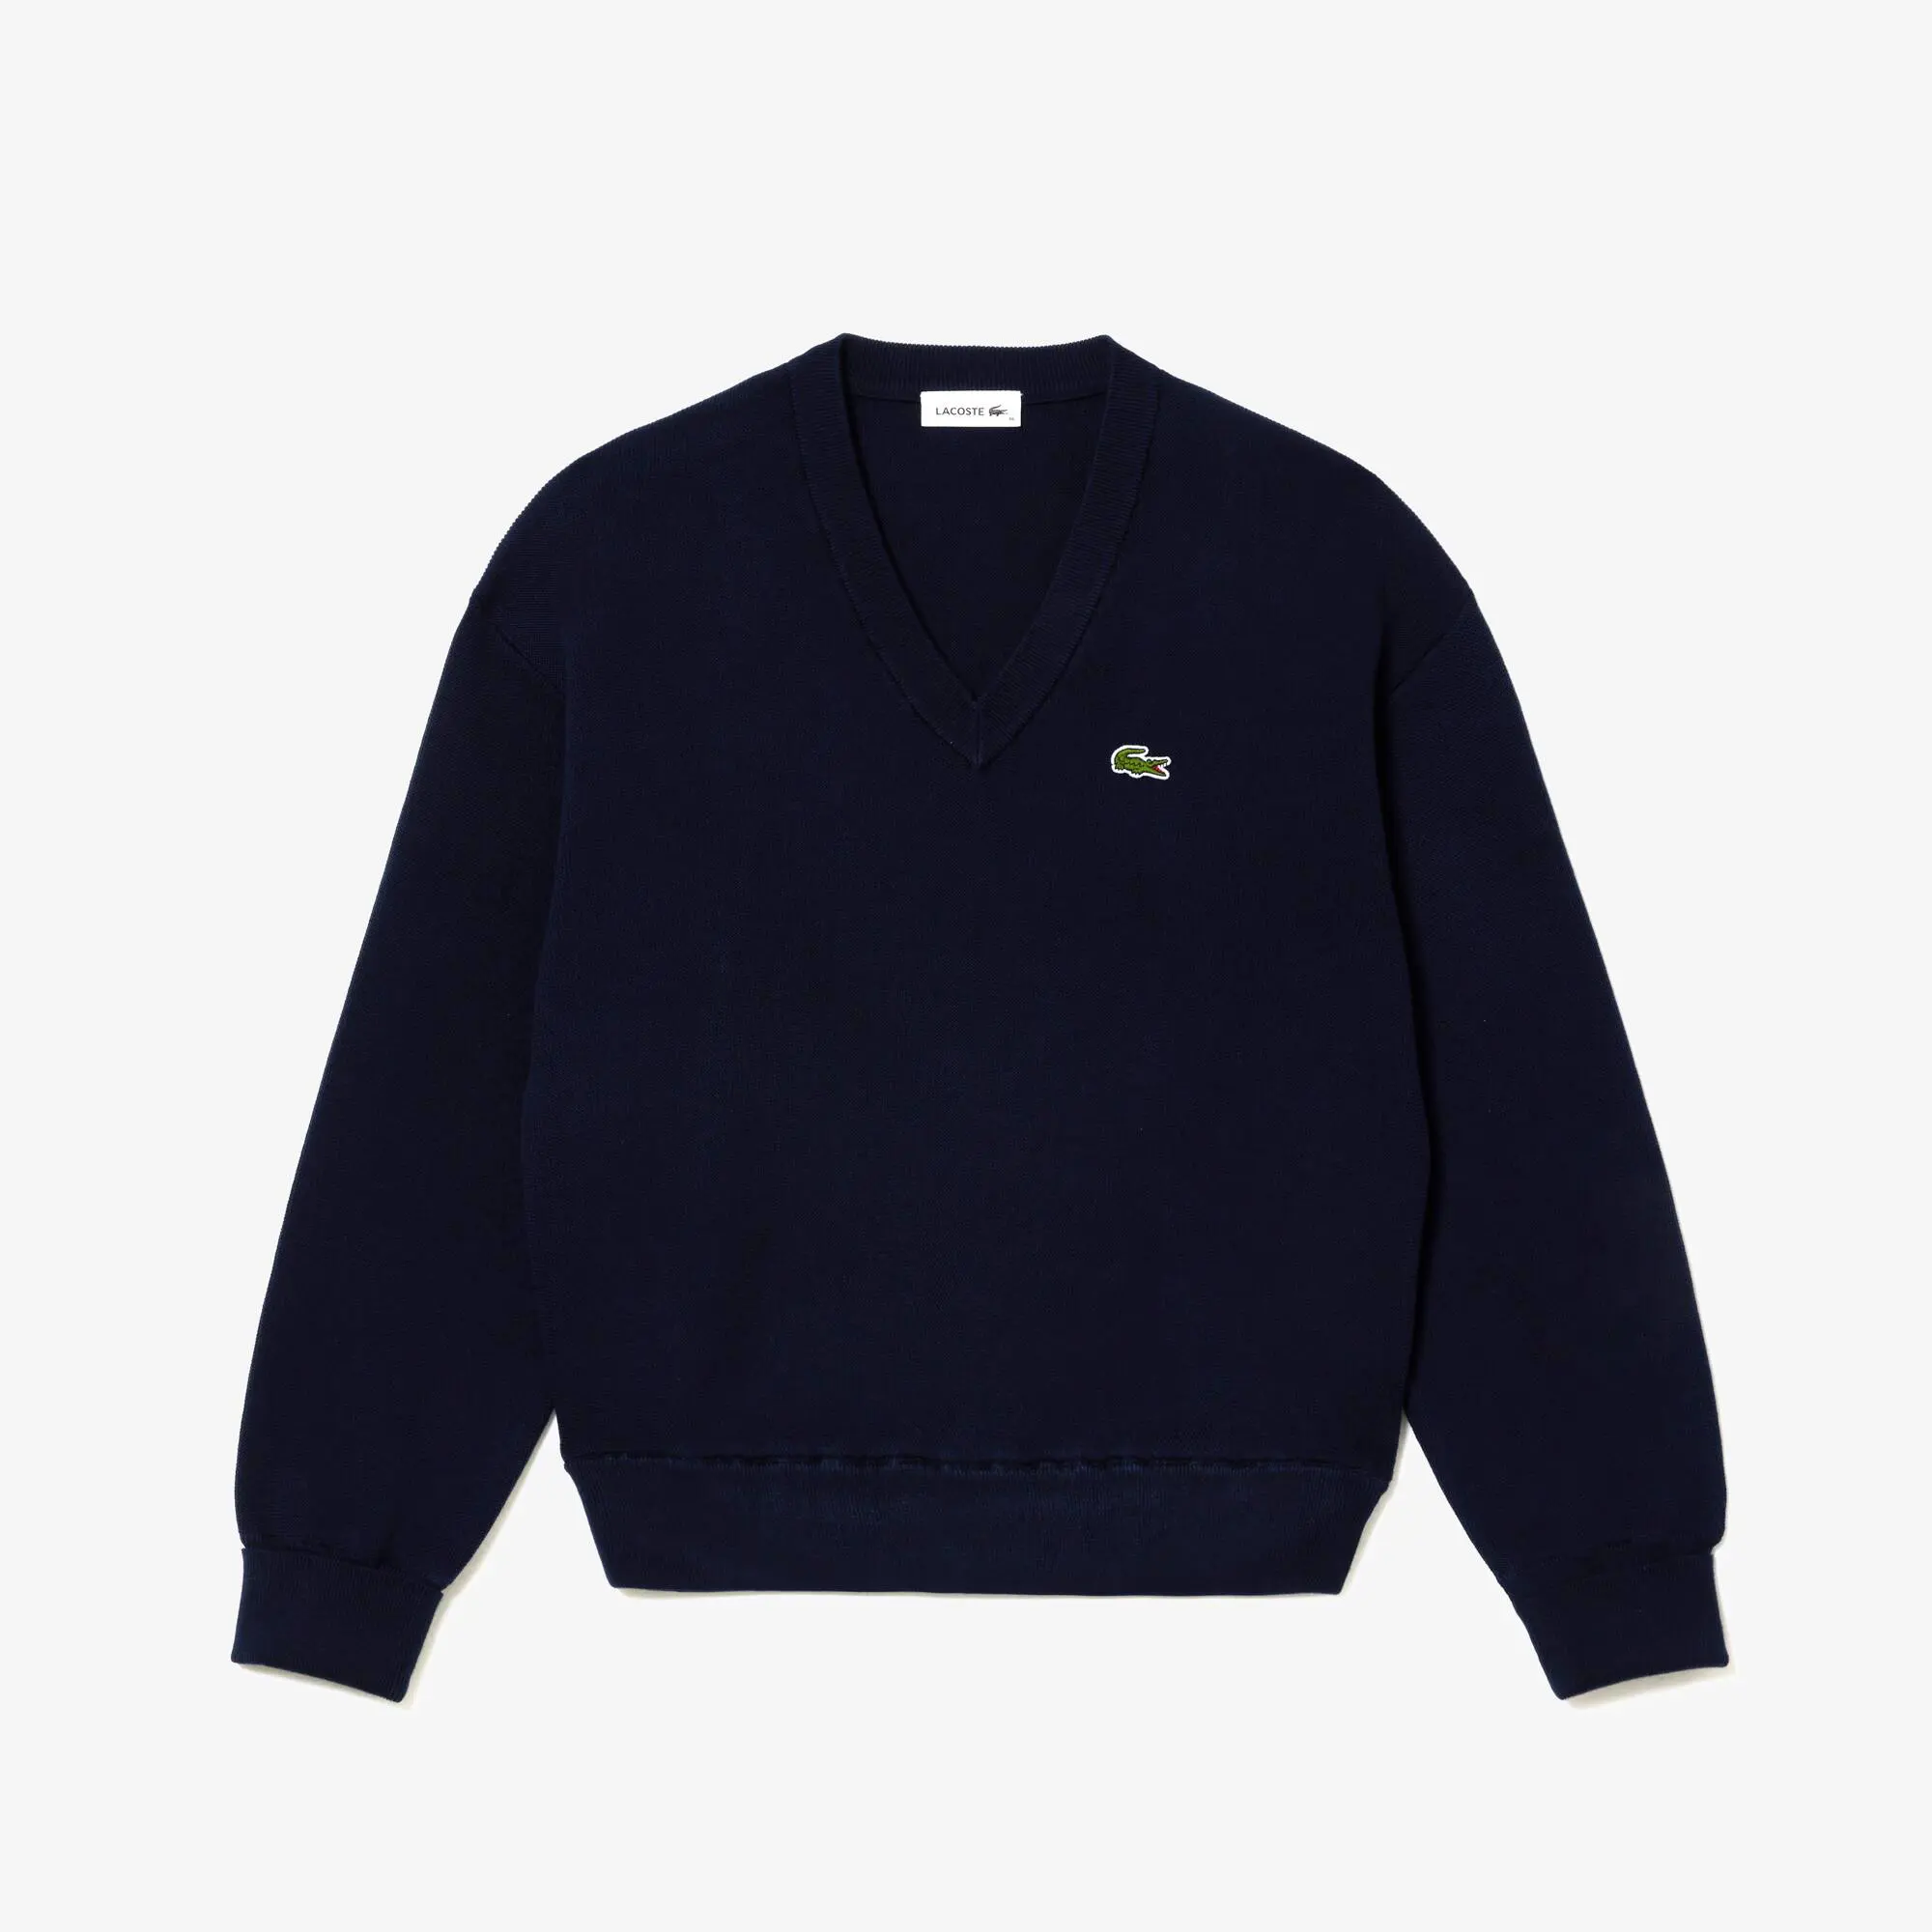 Lacoste Women’s Lacoste V-Neck Organic Cotton Sweater. 2